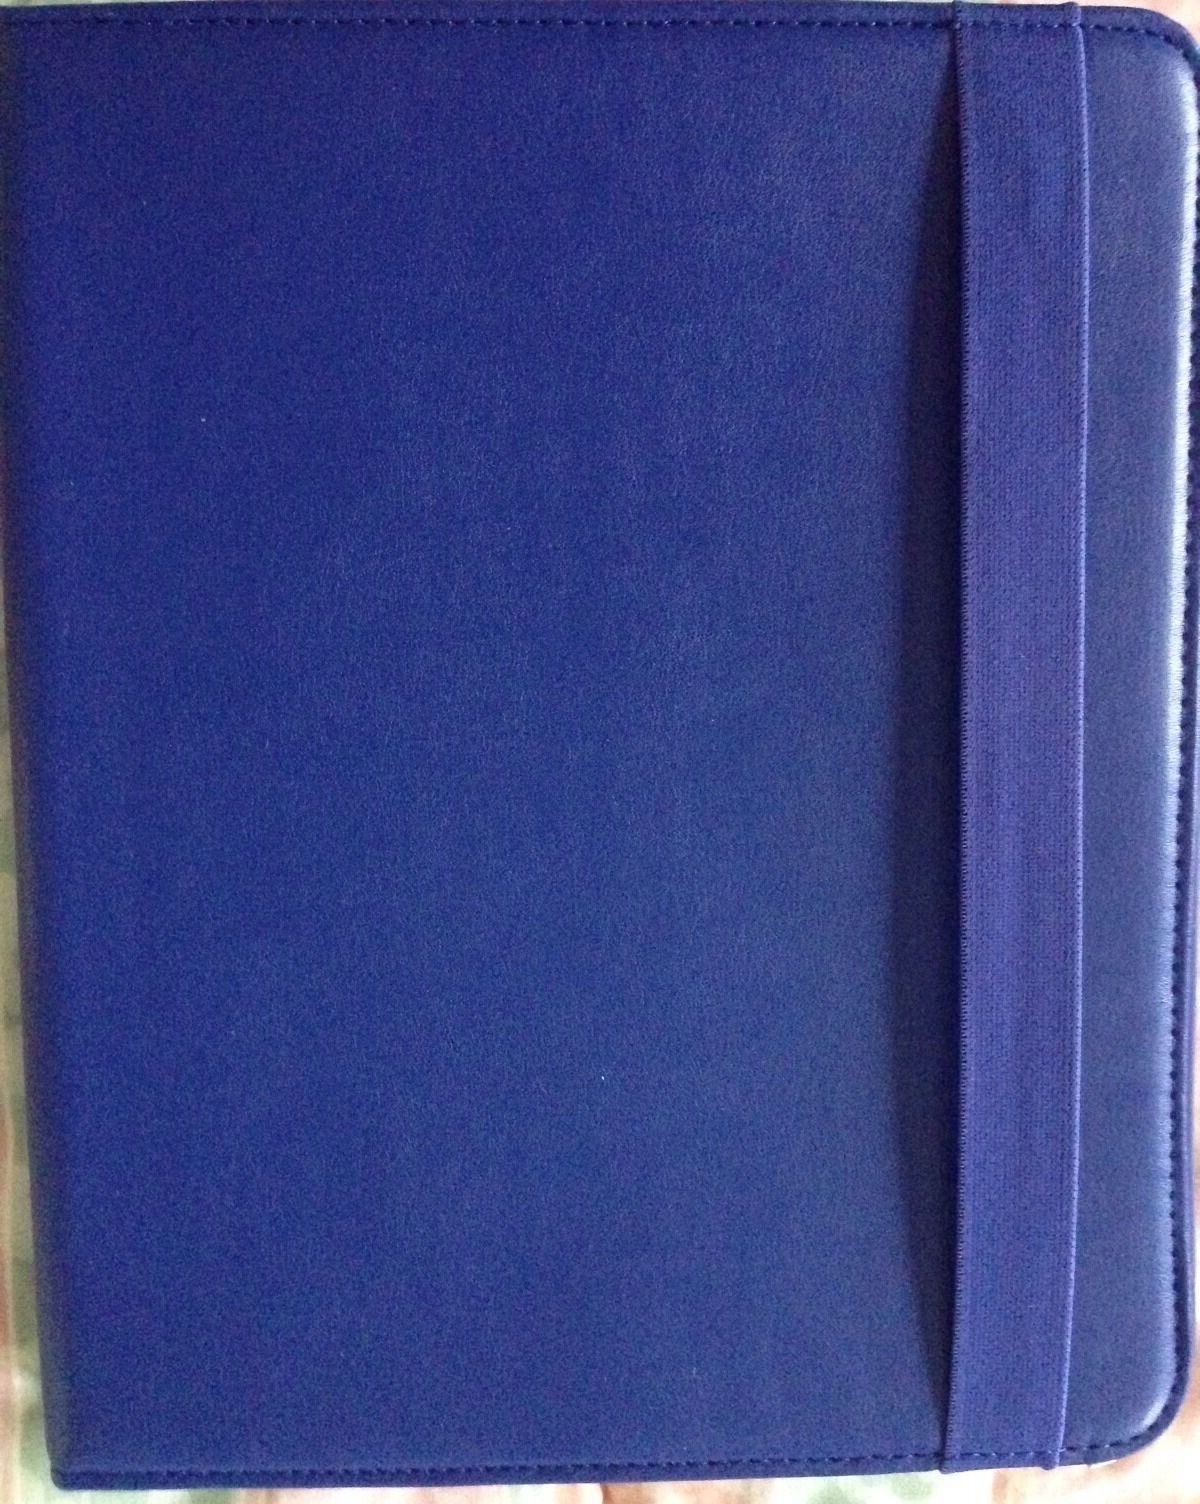 *Brand New* Incase Book Jacket Folio Protective Case for Ipad, Deep Violet